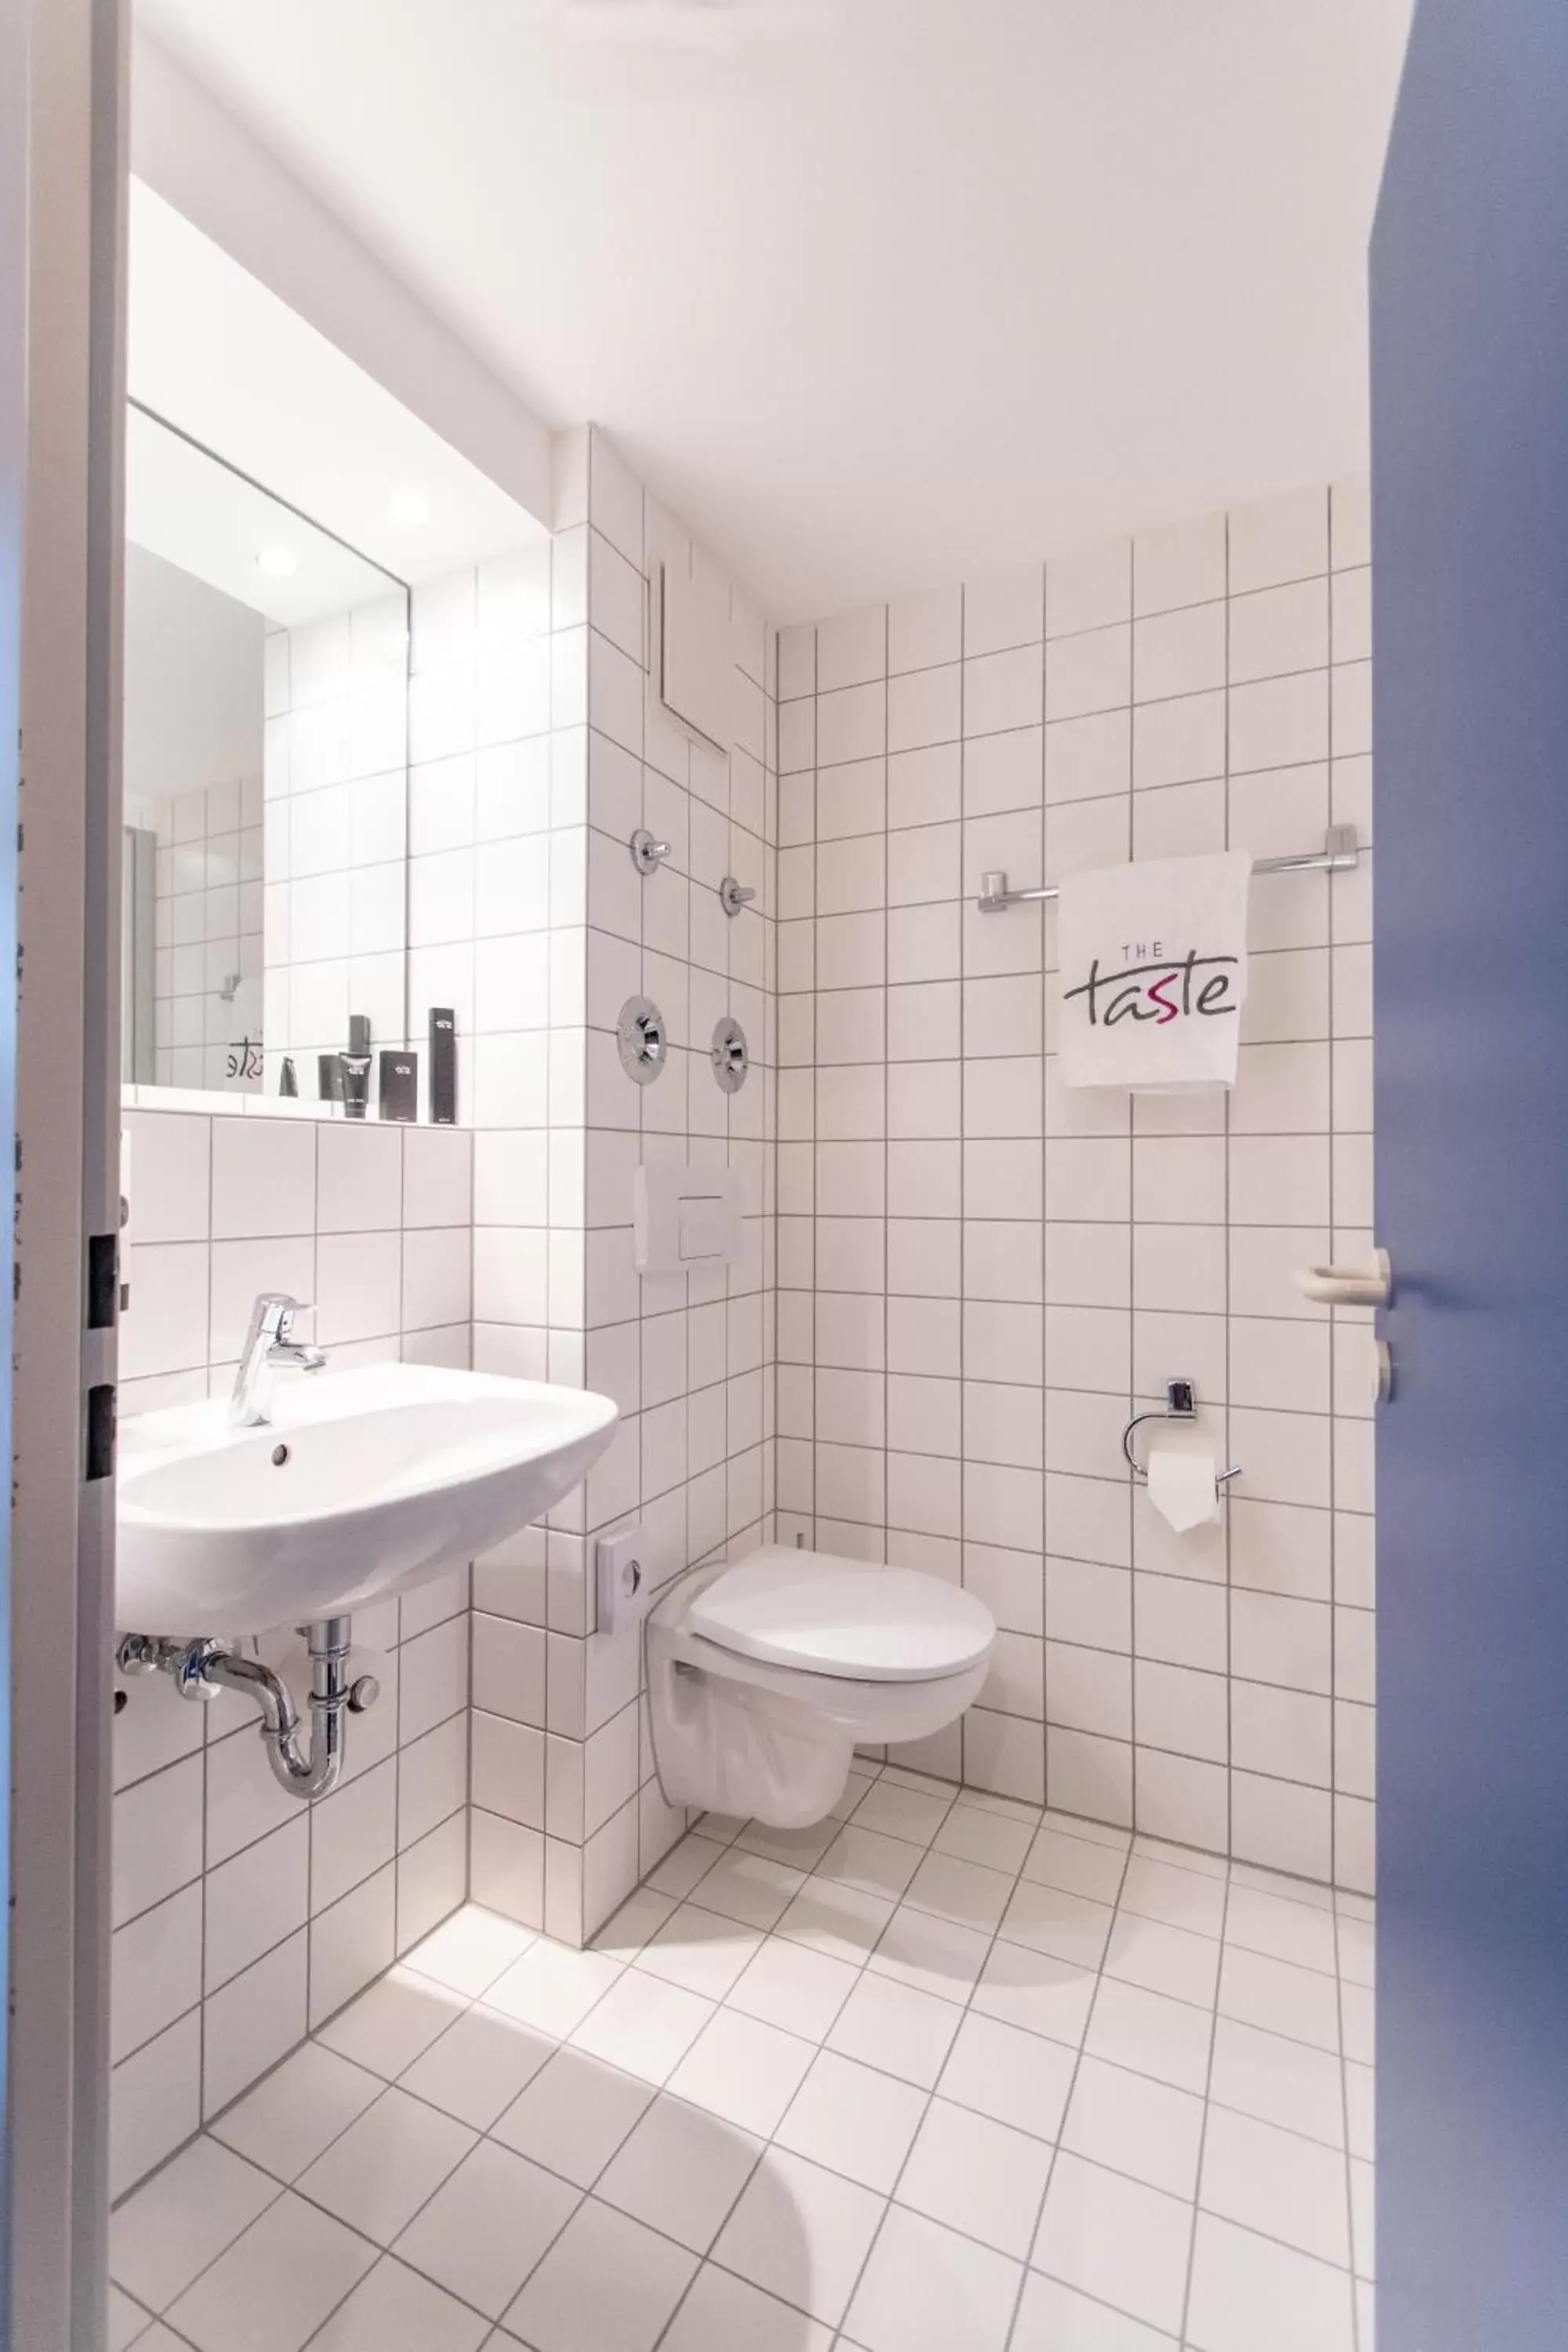 Bathroom in Taste Hotel Jettingen